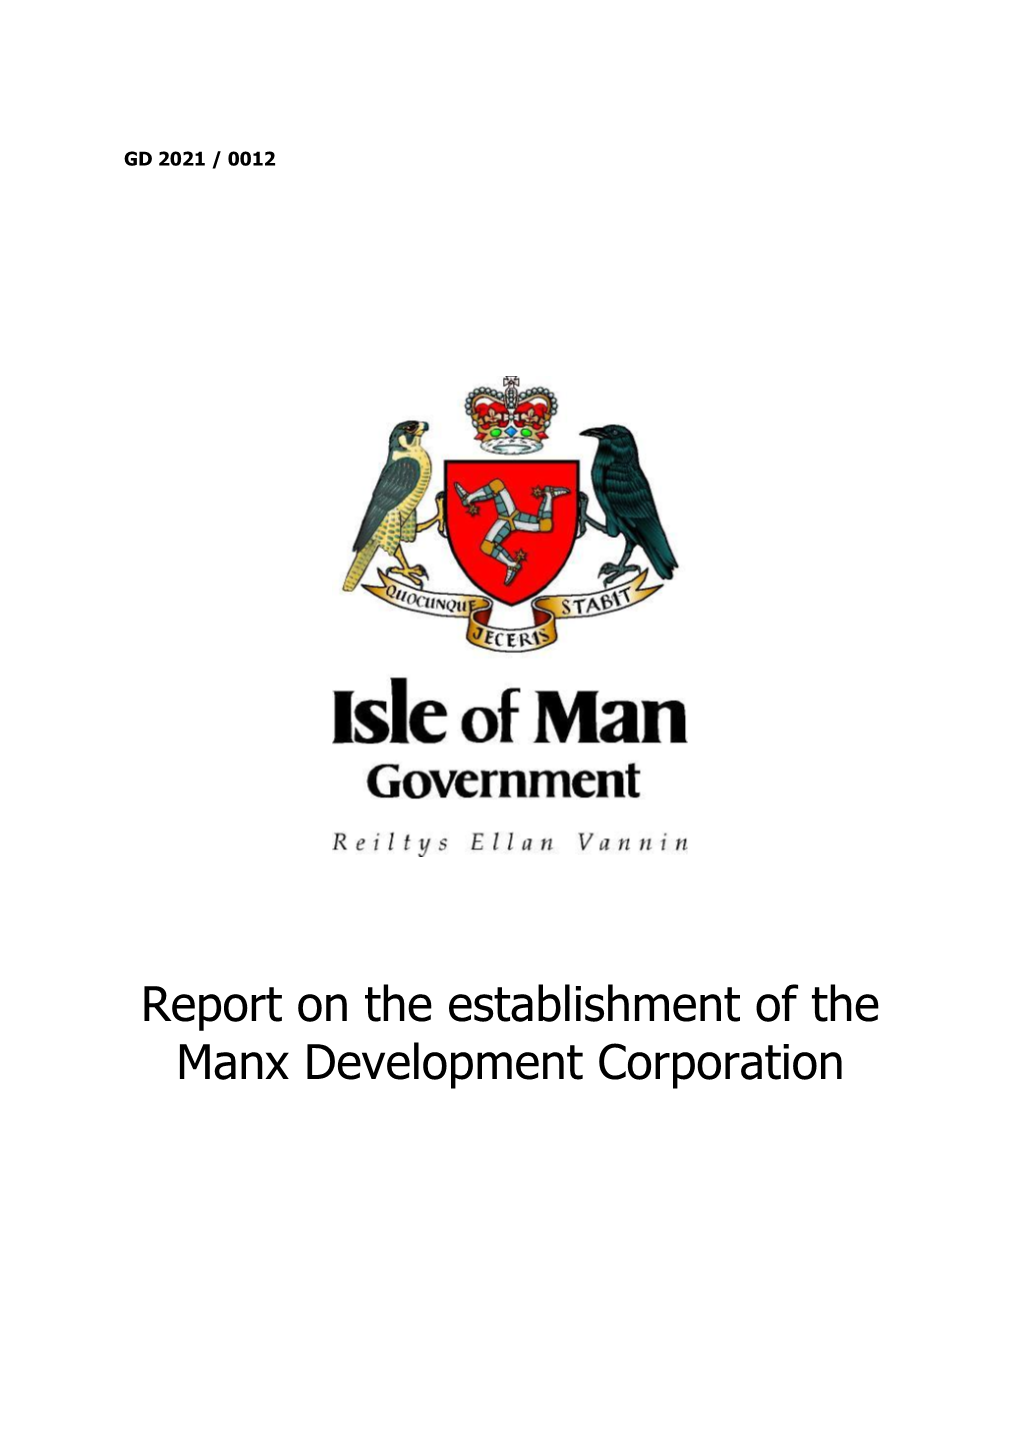 Report on the Establishment of the Manx Development Corporation